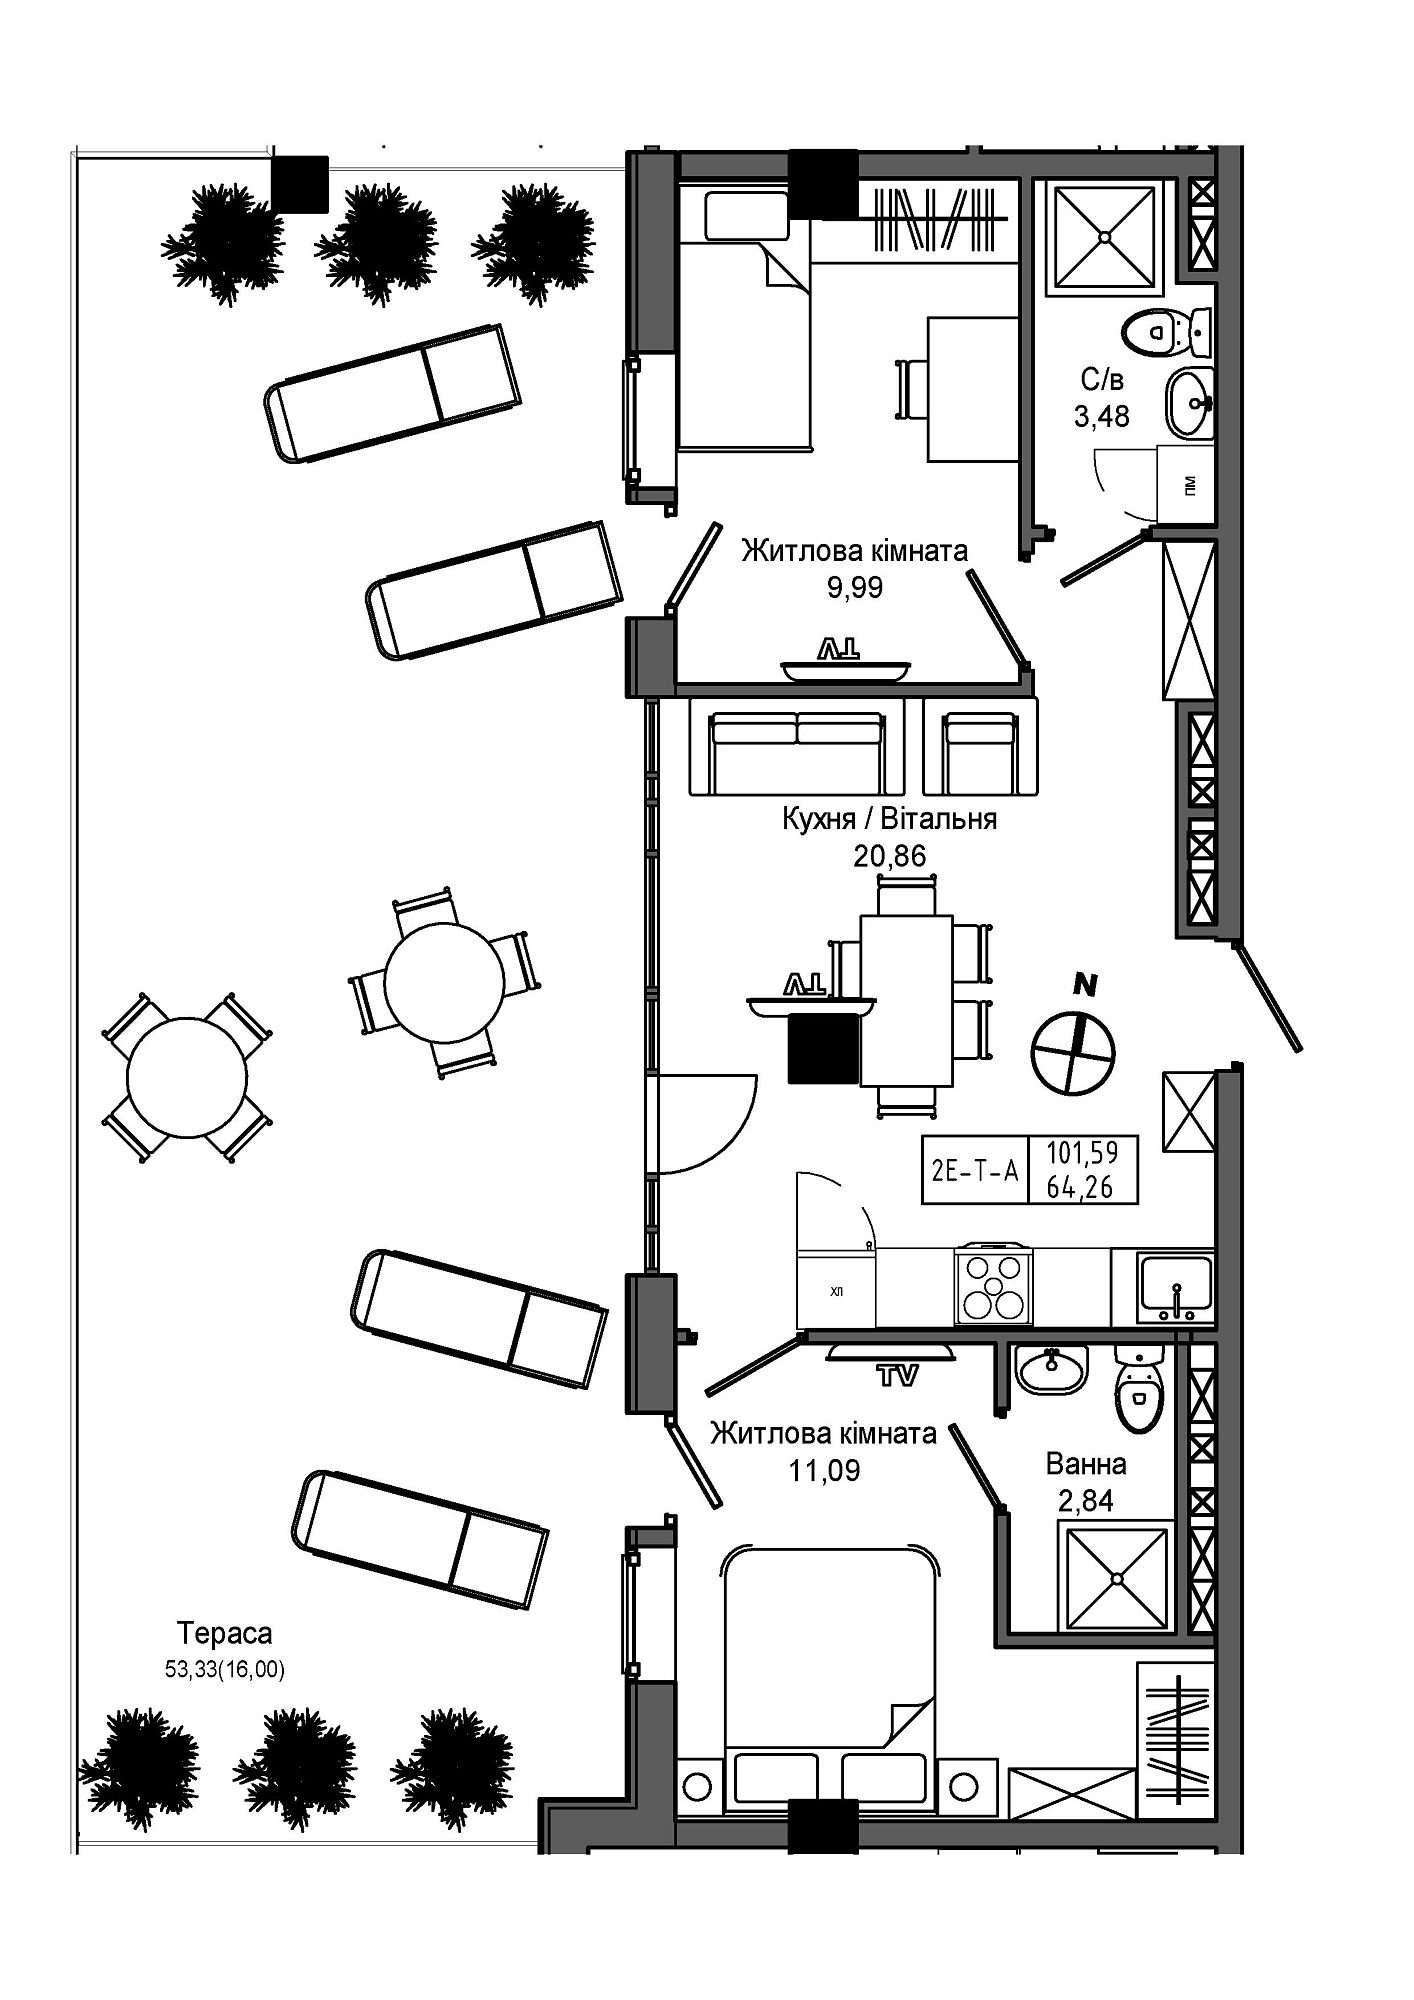 Планування 2-к квартира площею 64.26м2, UM-006-05/0014.